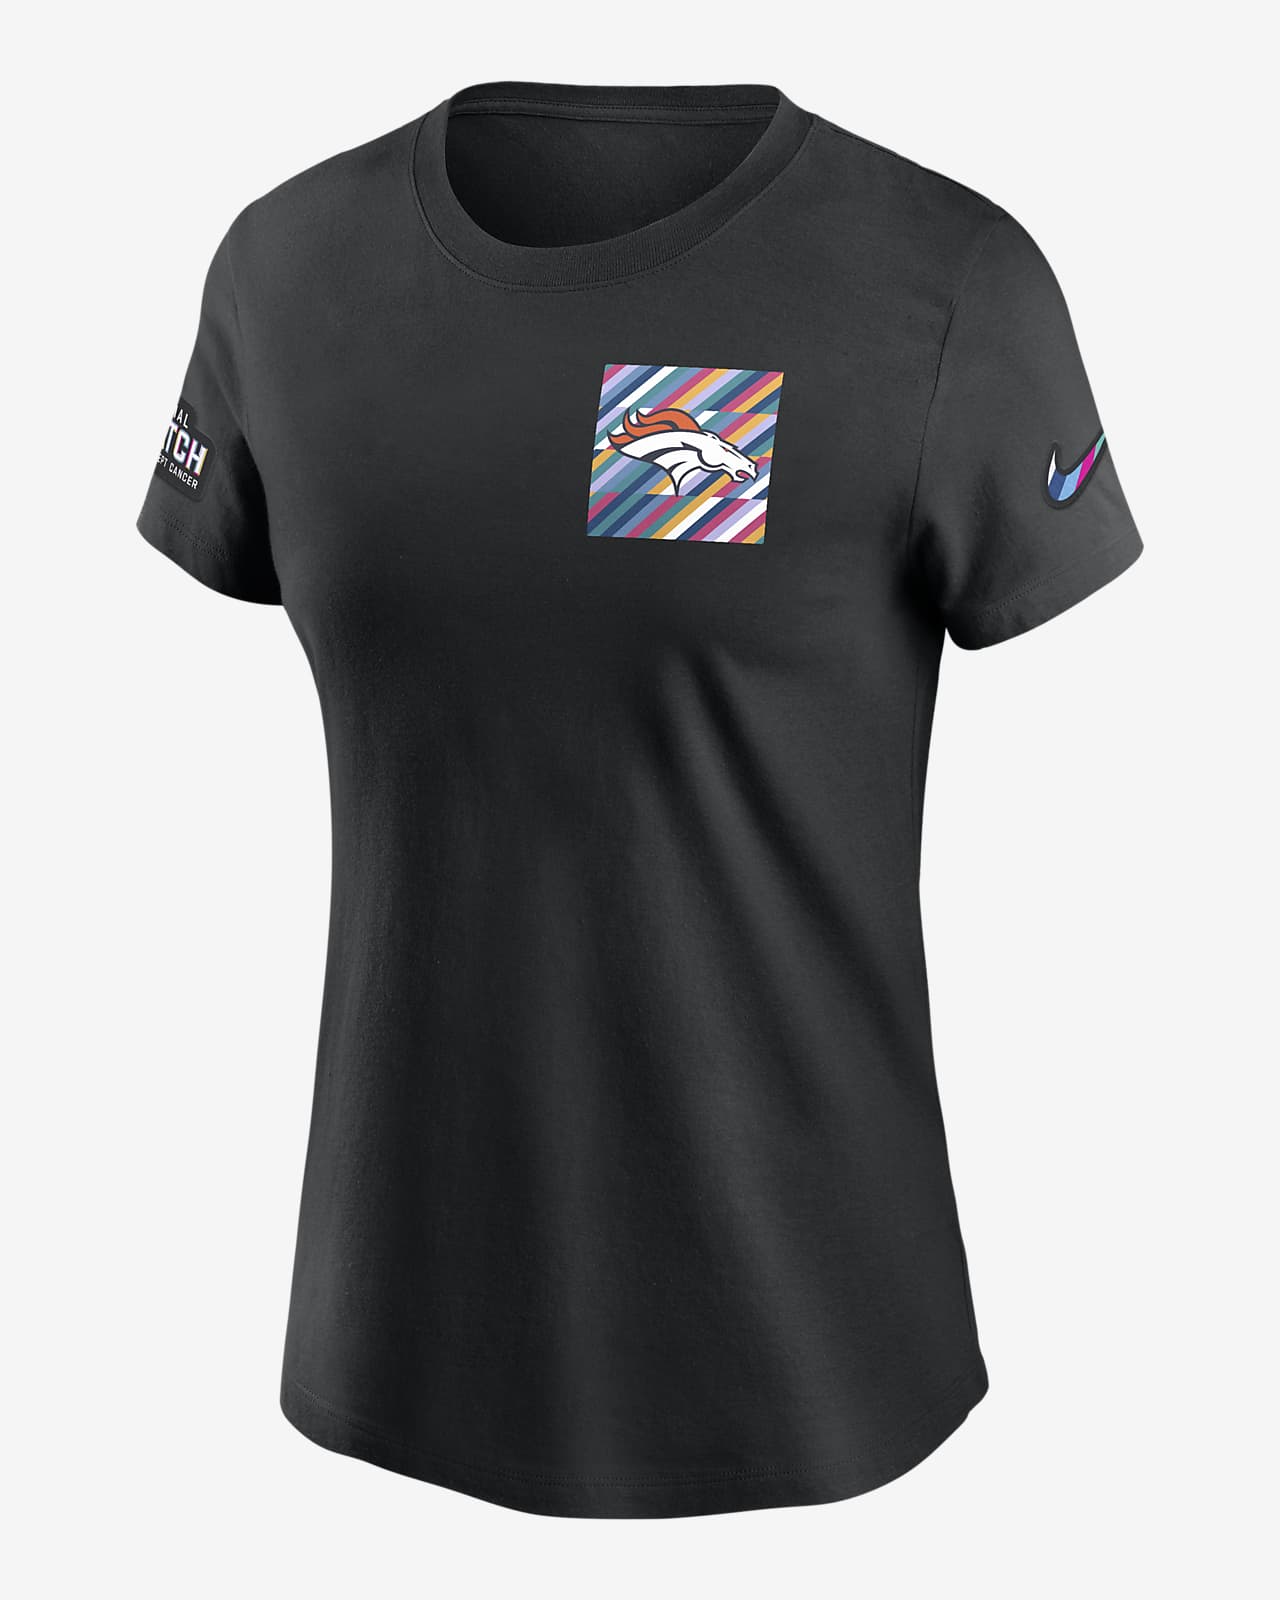 Retro Denver Broncos In-Com-Plete Logo Design T-Shirt Sweatshirt